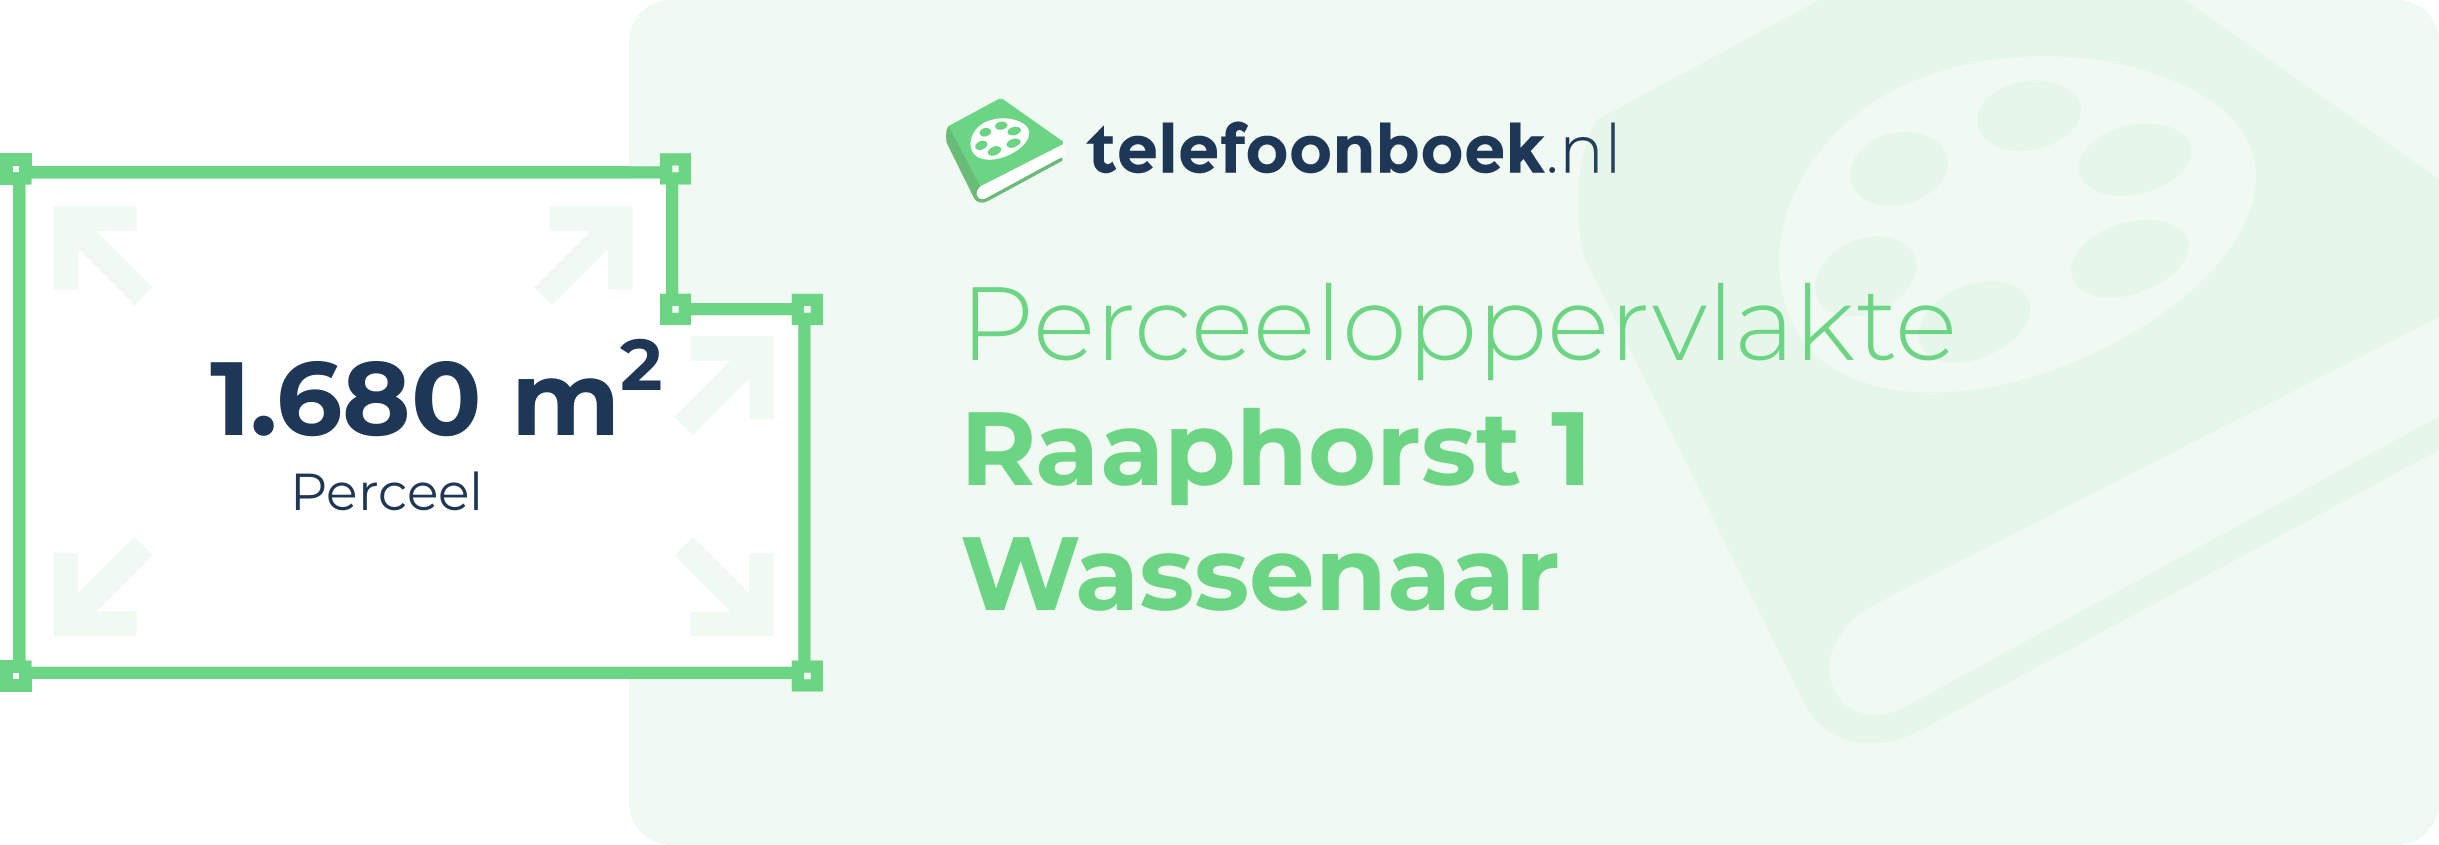 Perceeloppervlakte Raaphorst 1 Wassenaar